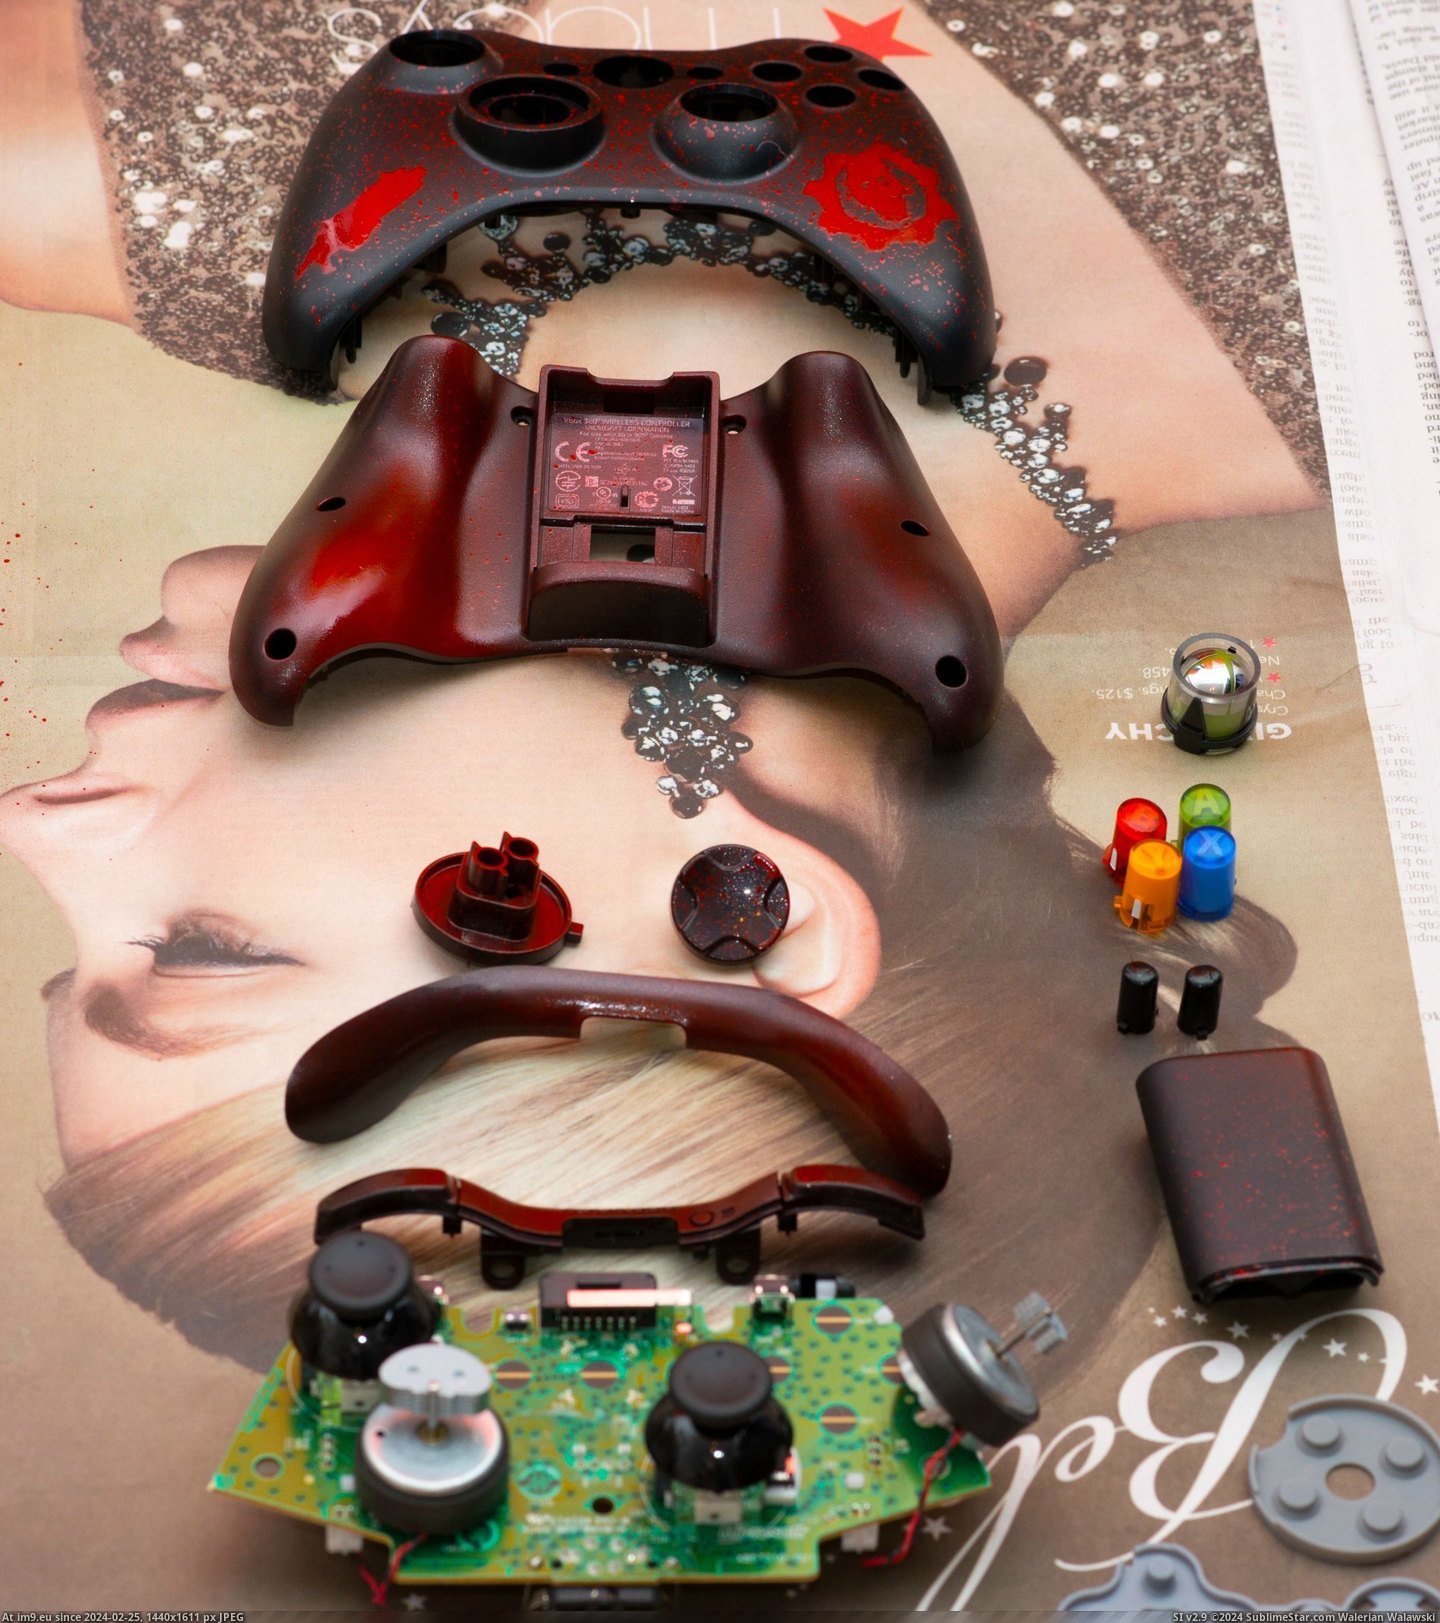 #Gaming #One #War #Controller #Redditor #Gears #Lucky #Painted #Xbox [Gaming] One lucky redditor is getting a custom painted Gears of War Xbox 360 controller! 1 Pic. (Obraz z album My r/GAMING favs))